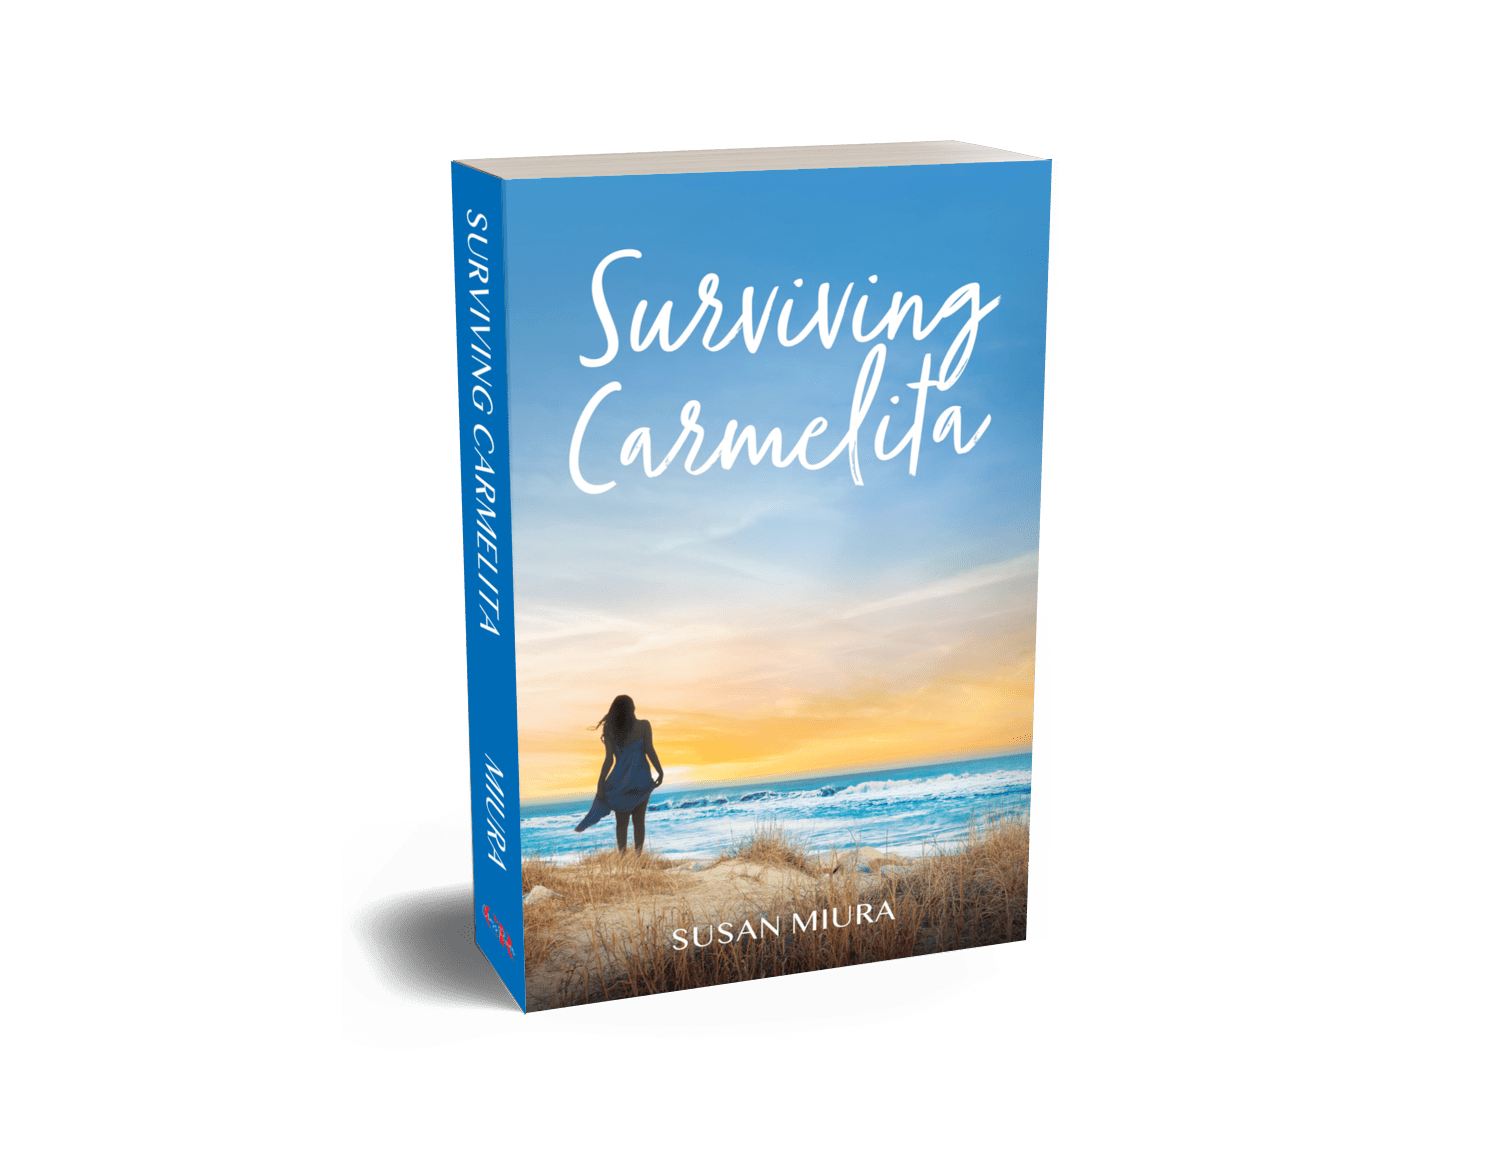 Surviving Carmelita - Susan Miura - CrossRiver Media - Christian fiction book